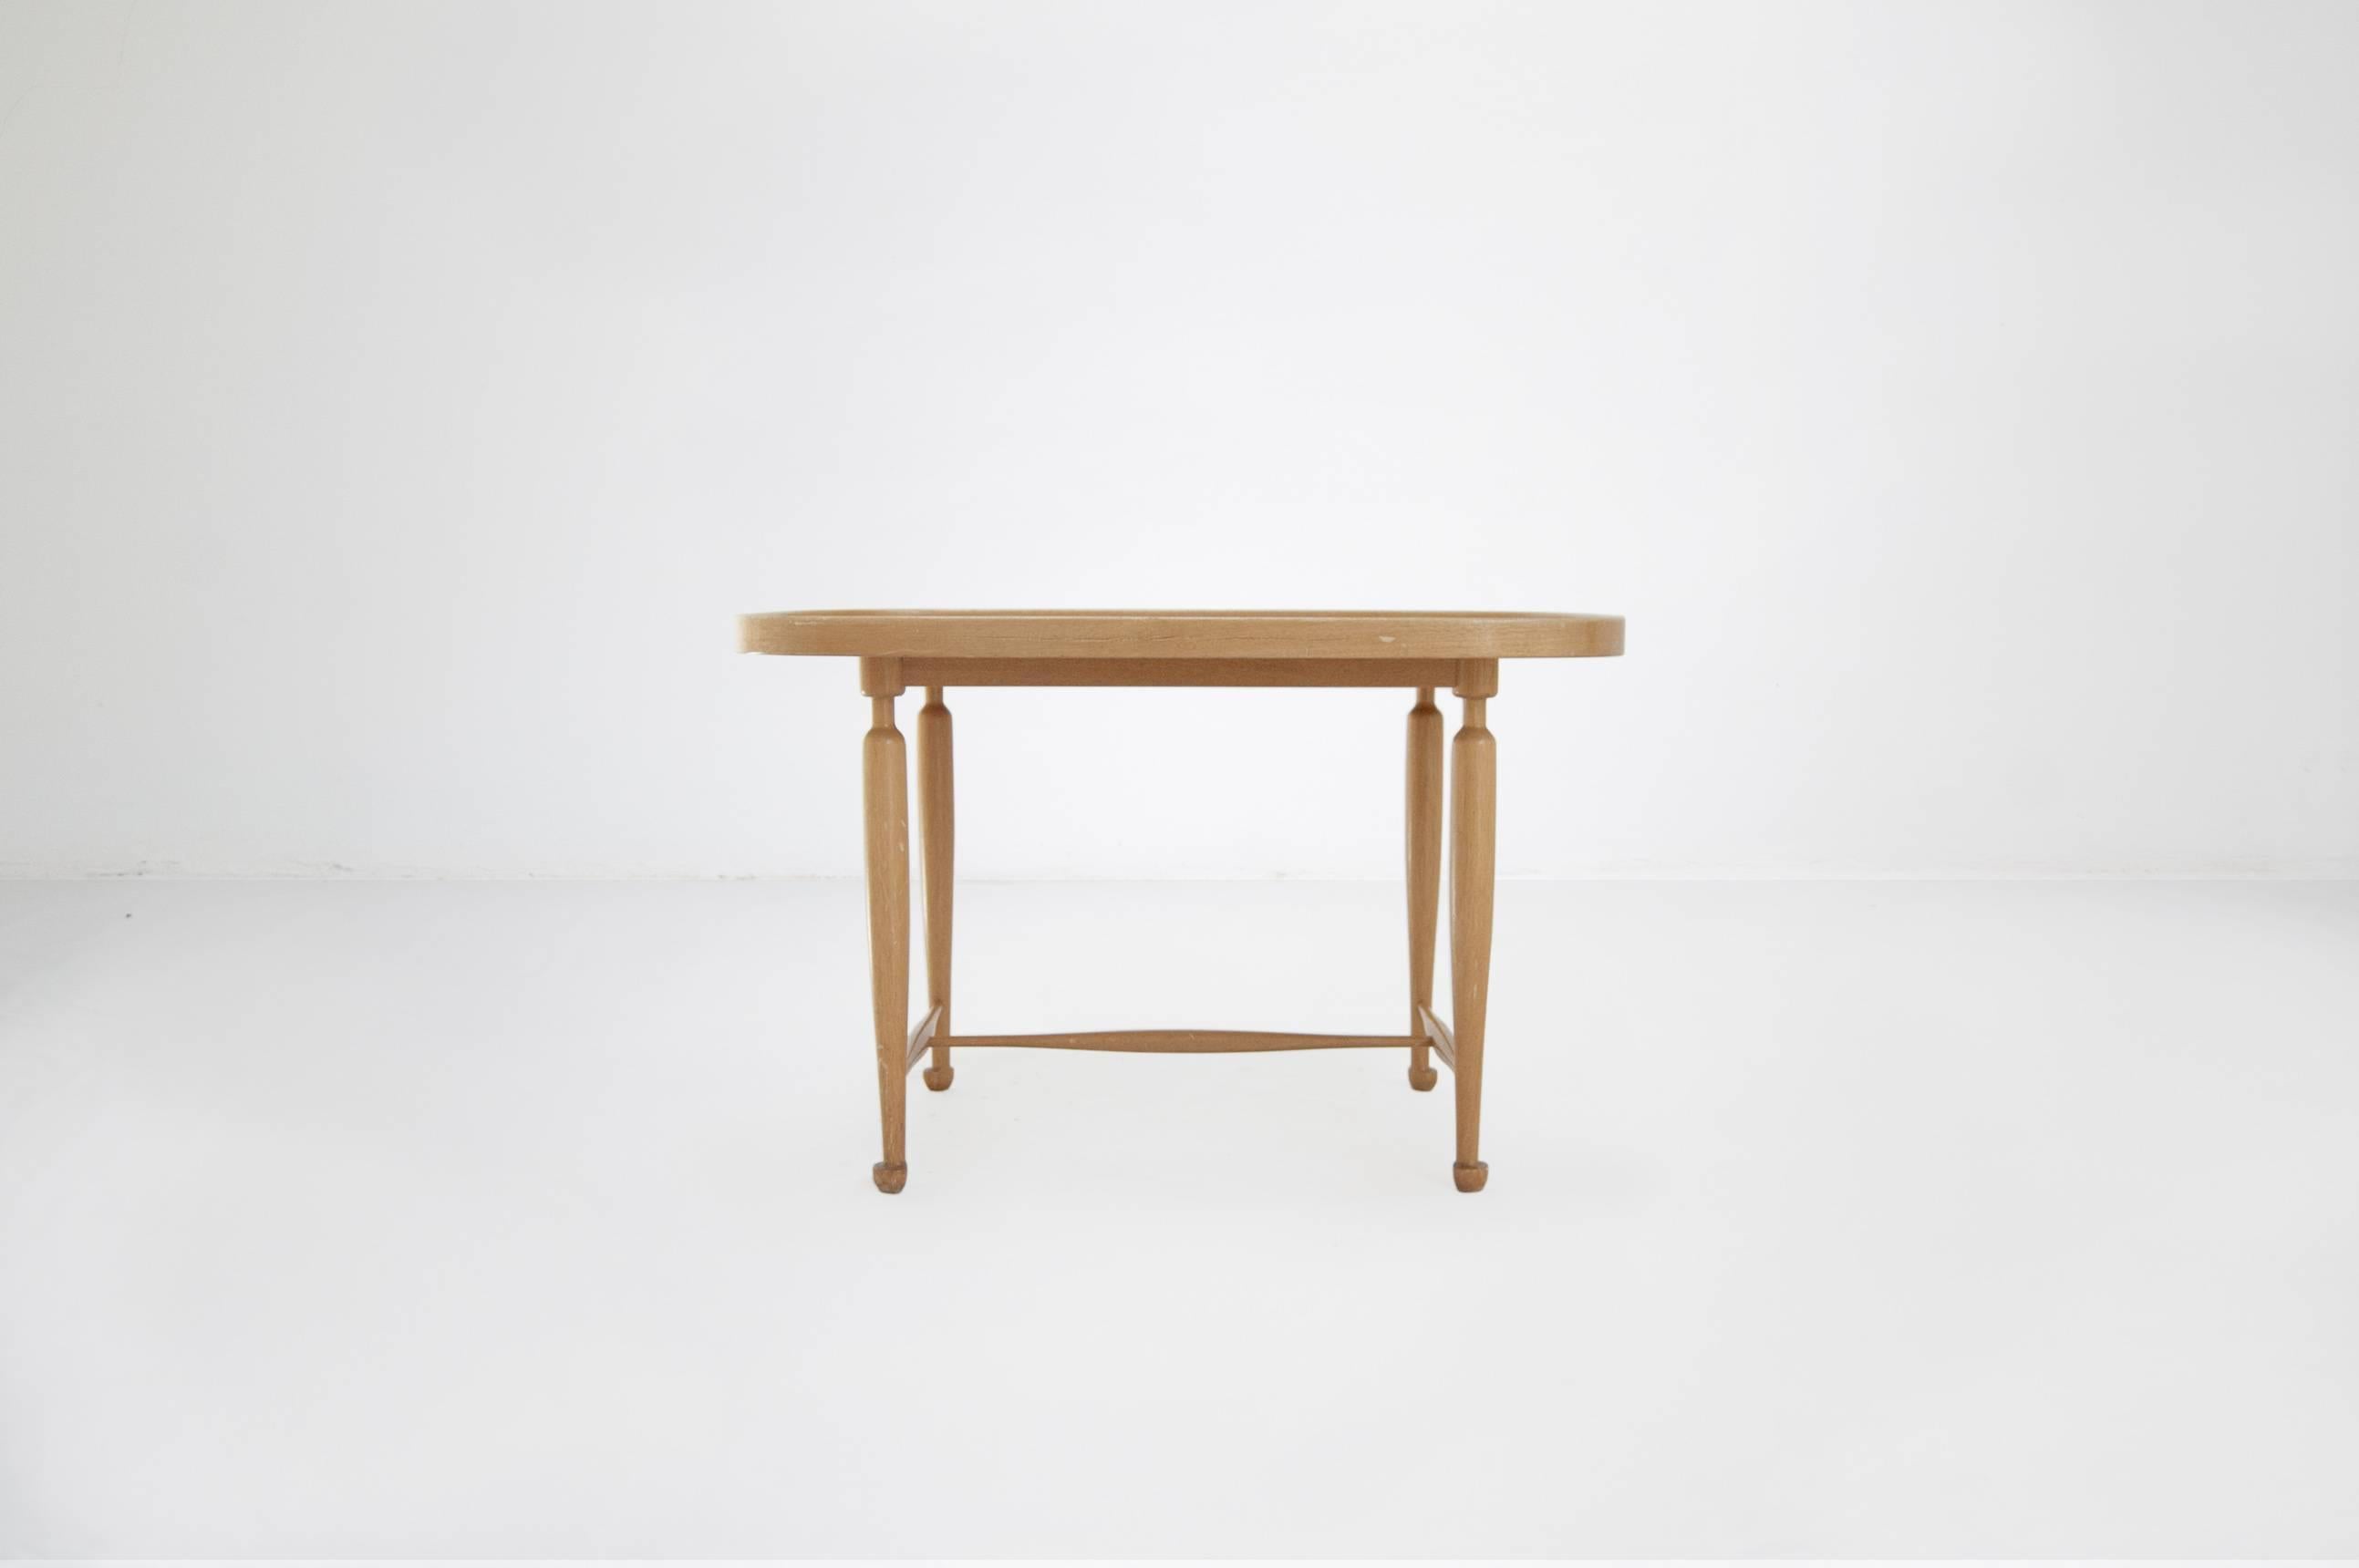 Josef Frank (1885-1967)

Coffee table model 974.
Manufactured by Svenskt Tenn, 
Sweden, 1938
Mahogany wood

Measurements
76 cm x 56 cm x 55h cm.
30 w x 22 d x 21,65h in.

Literature
Josef Frank: 1885-1967 – Minnesutställning, exh., cat,